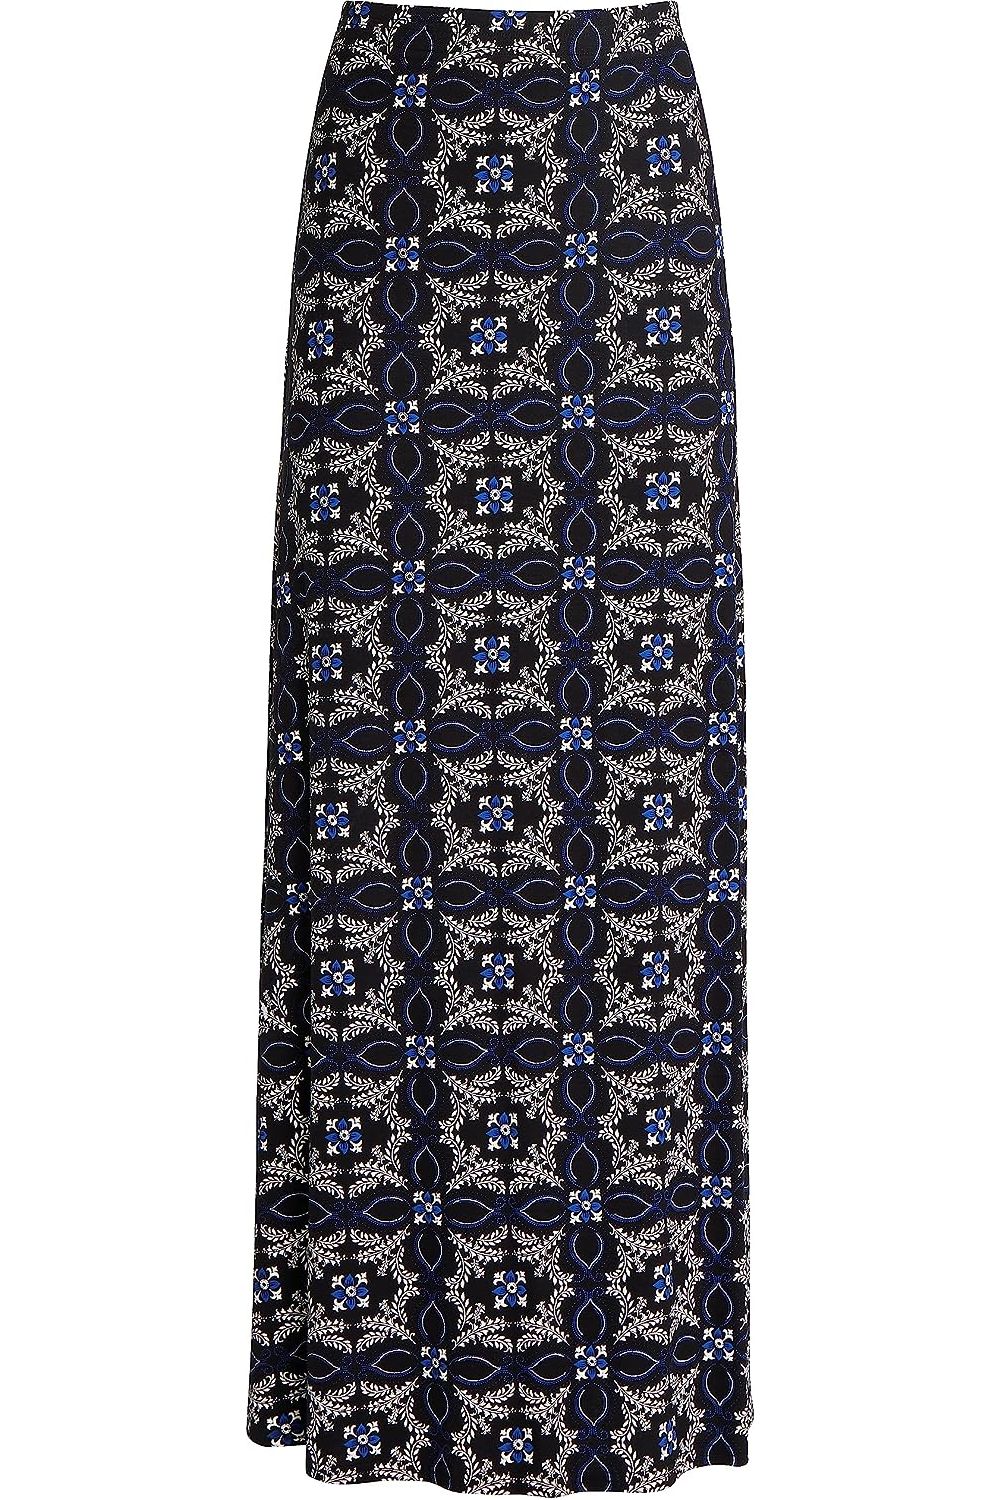 Plus Size Square Floral Blue Print Maxi Skirt